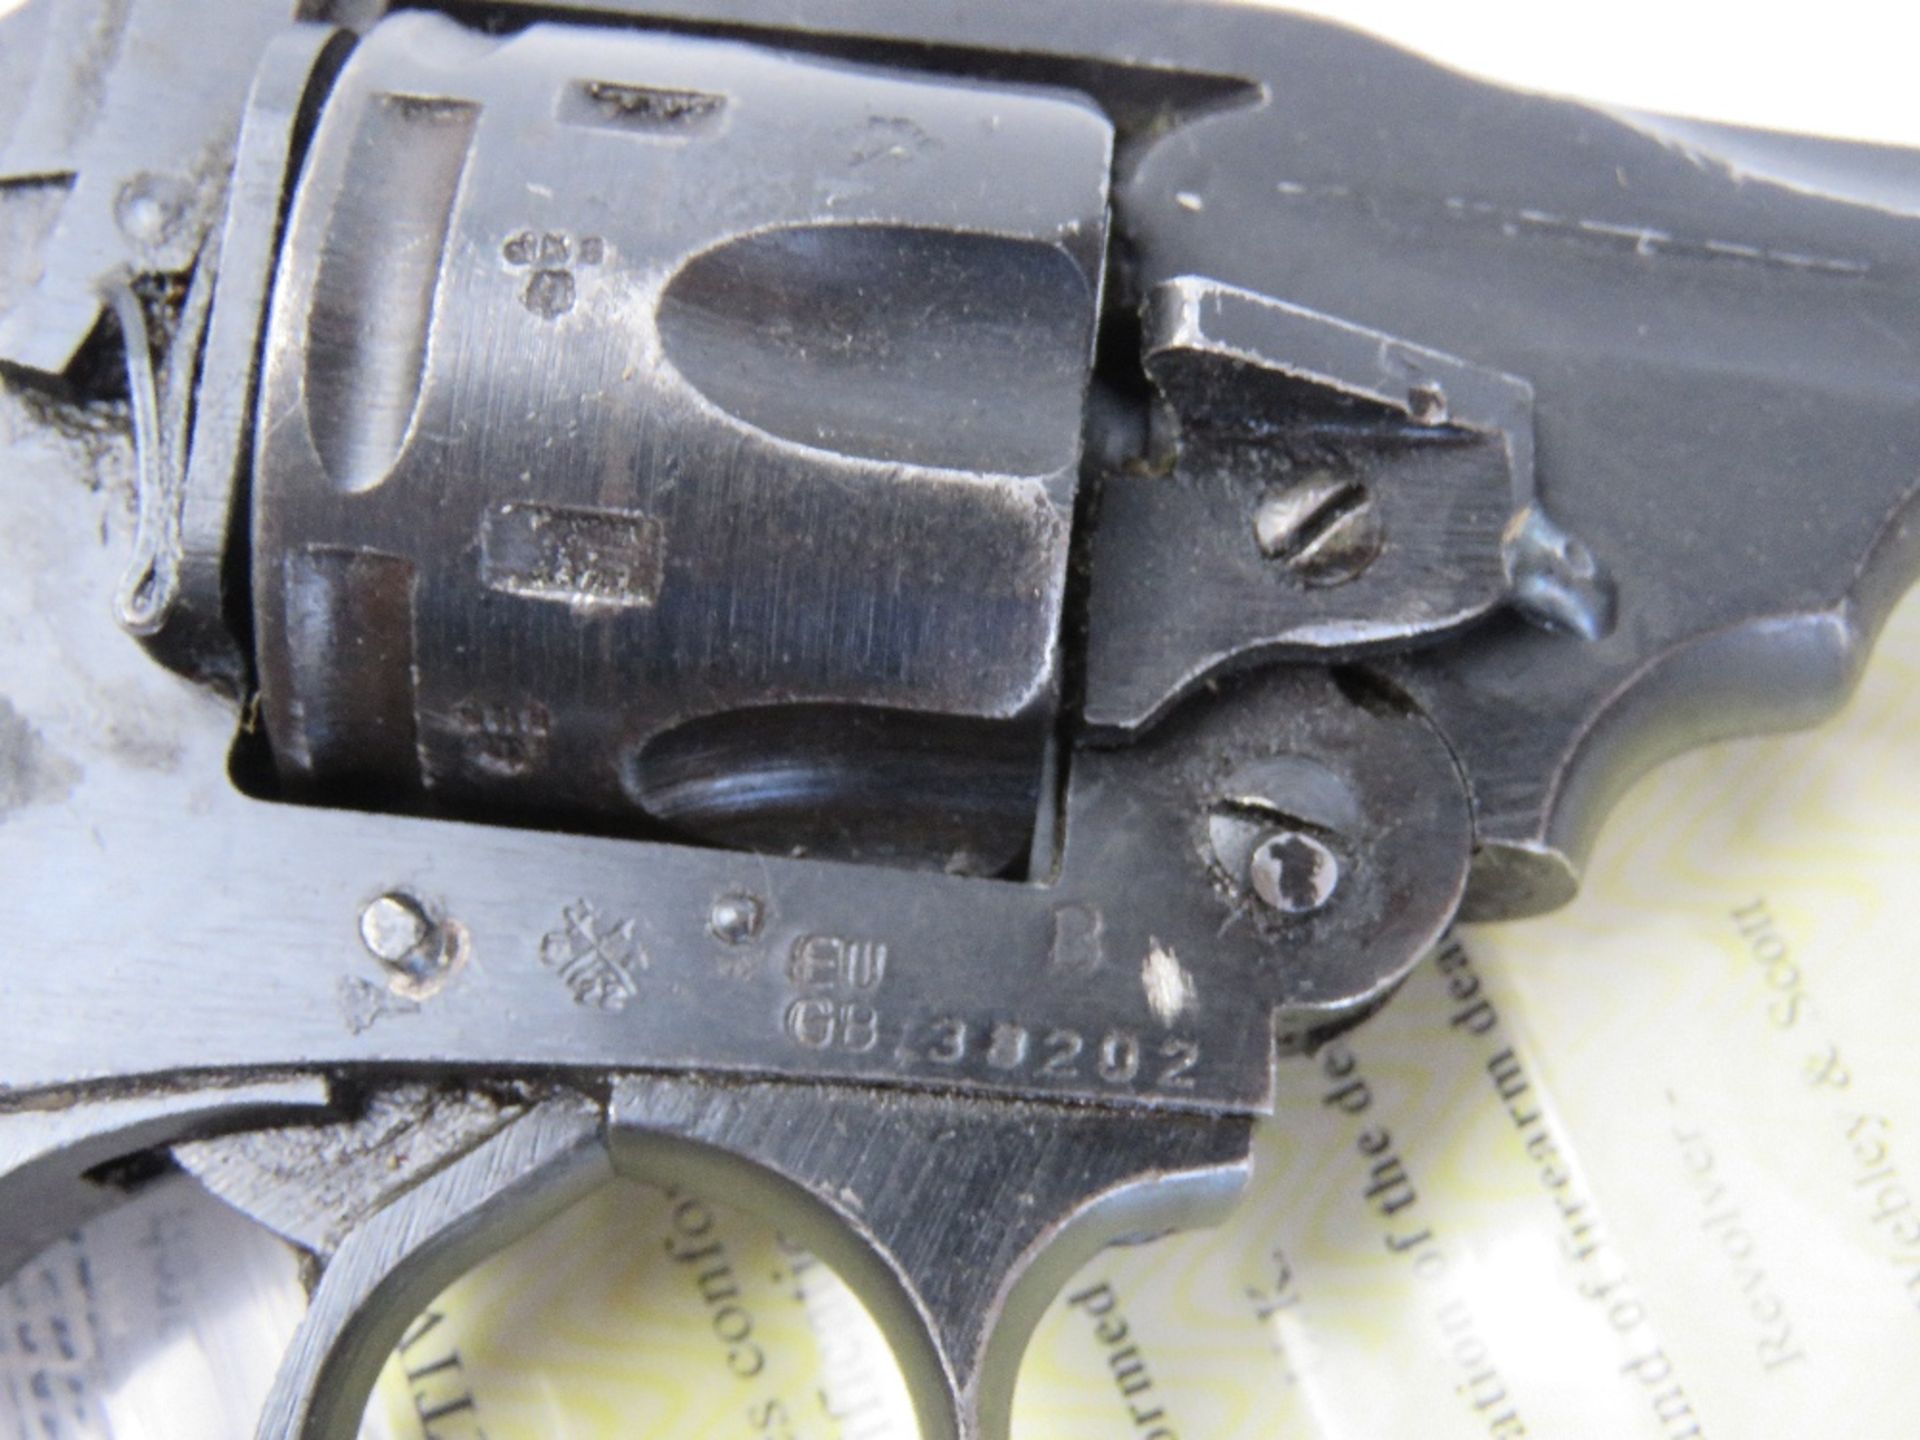 A deactivated Webley MK IV snub nosed revolver. - Image 4 of 4